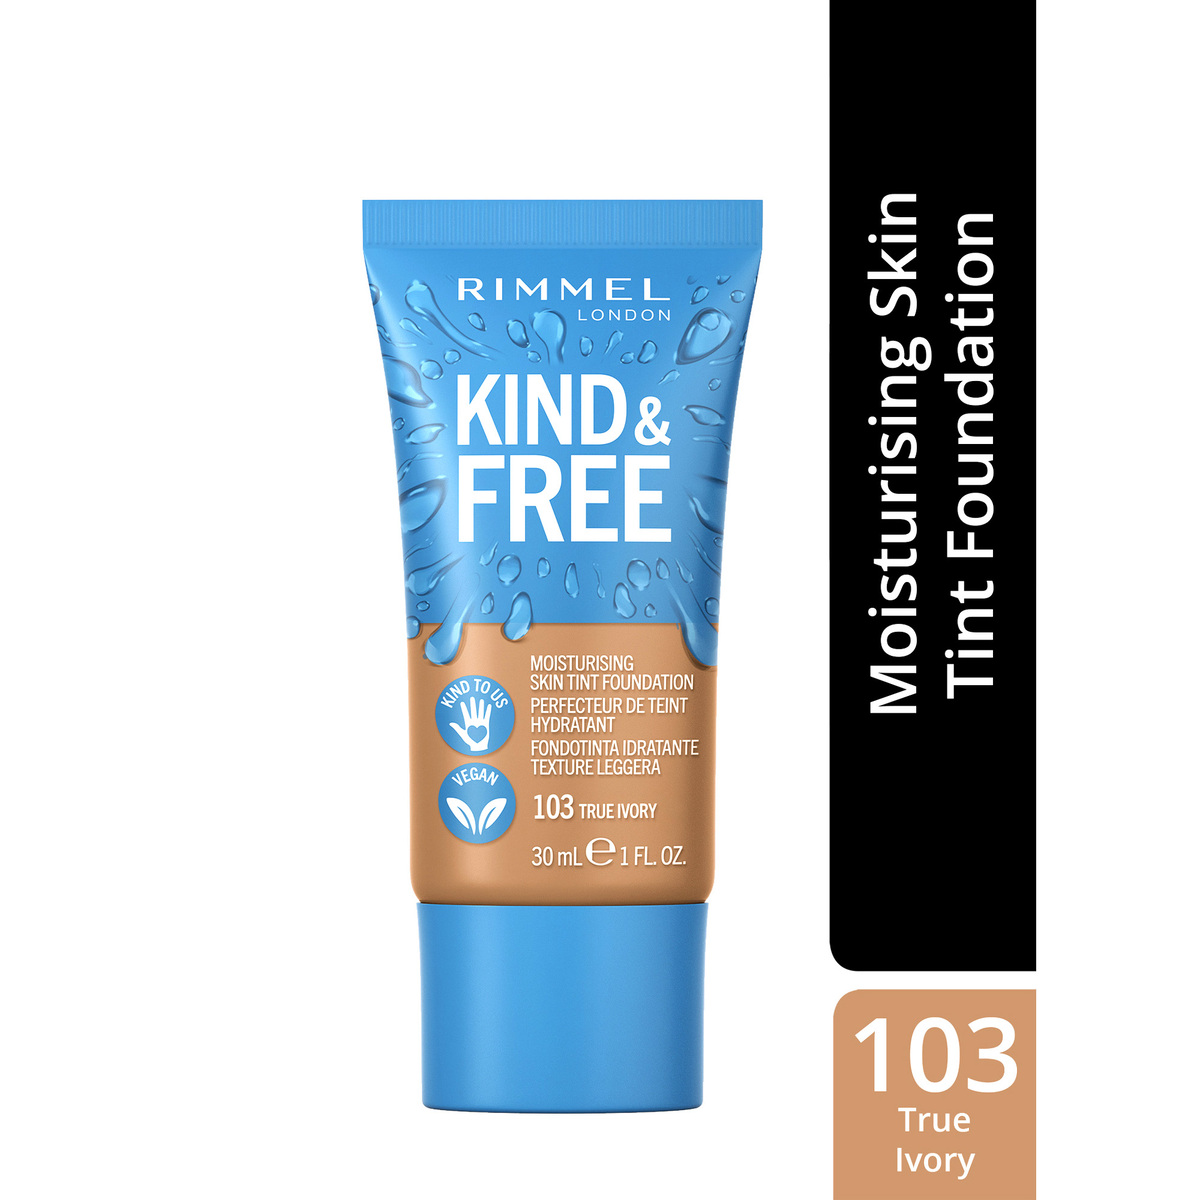 Rimmel London Kind & Free Foundation, 103 True Ivory, 30 ml